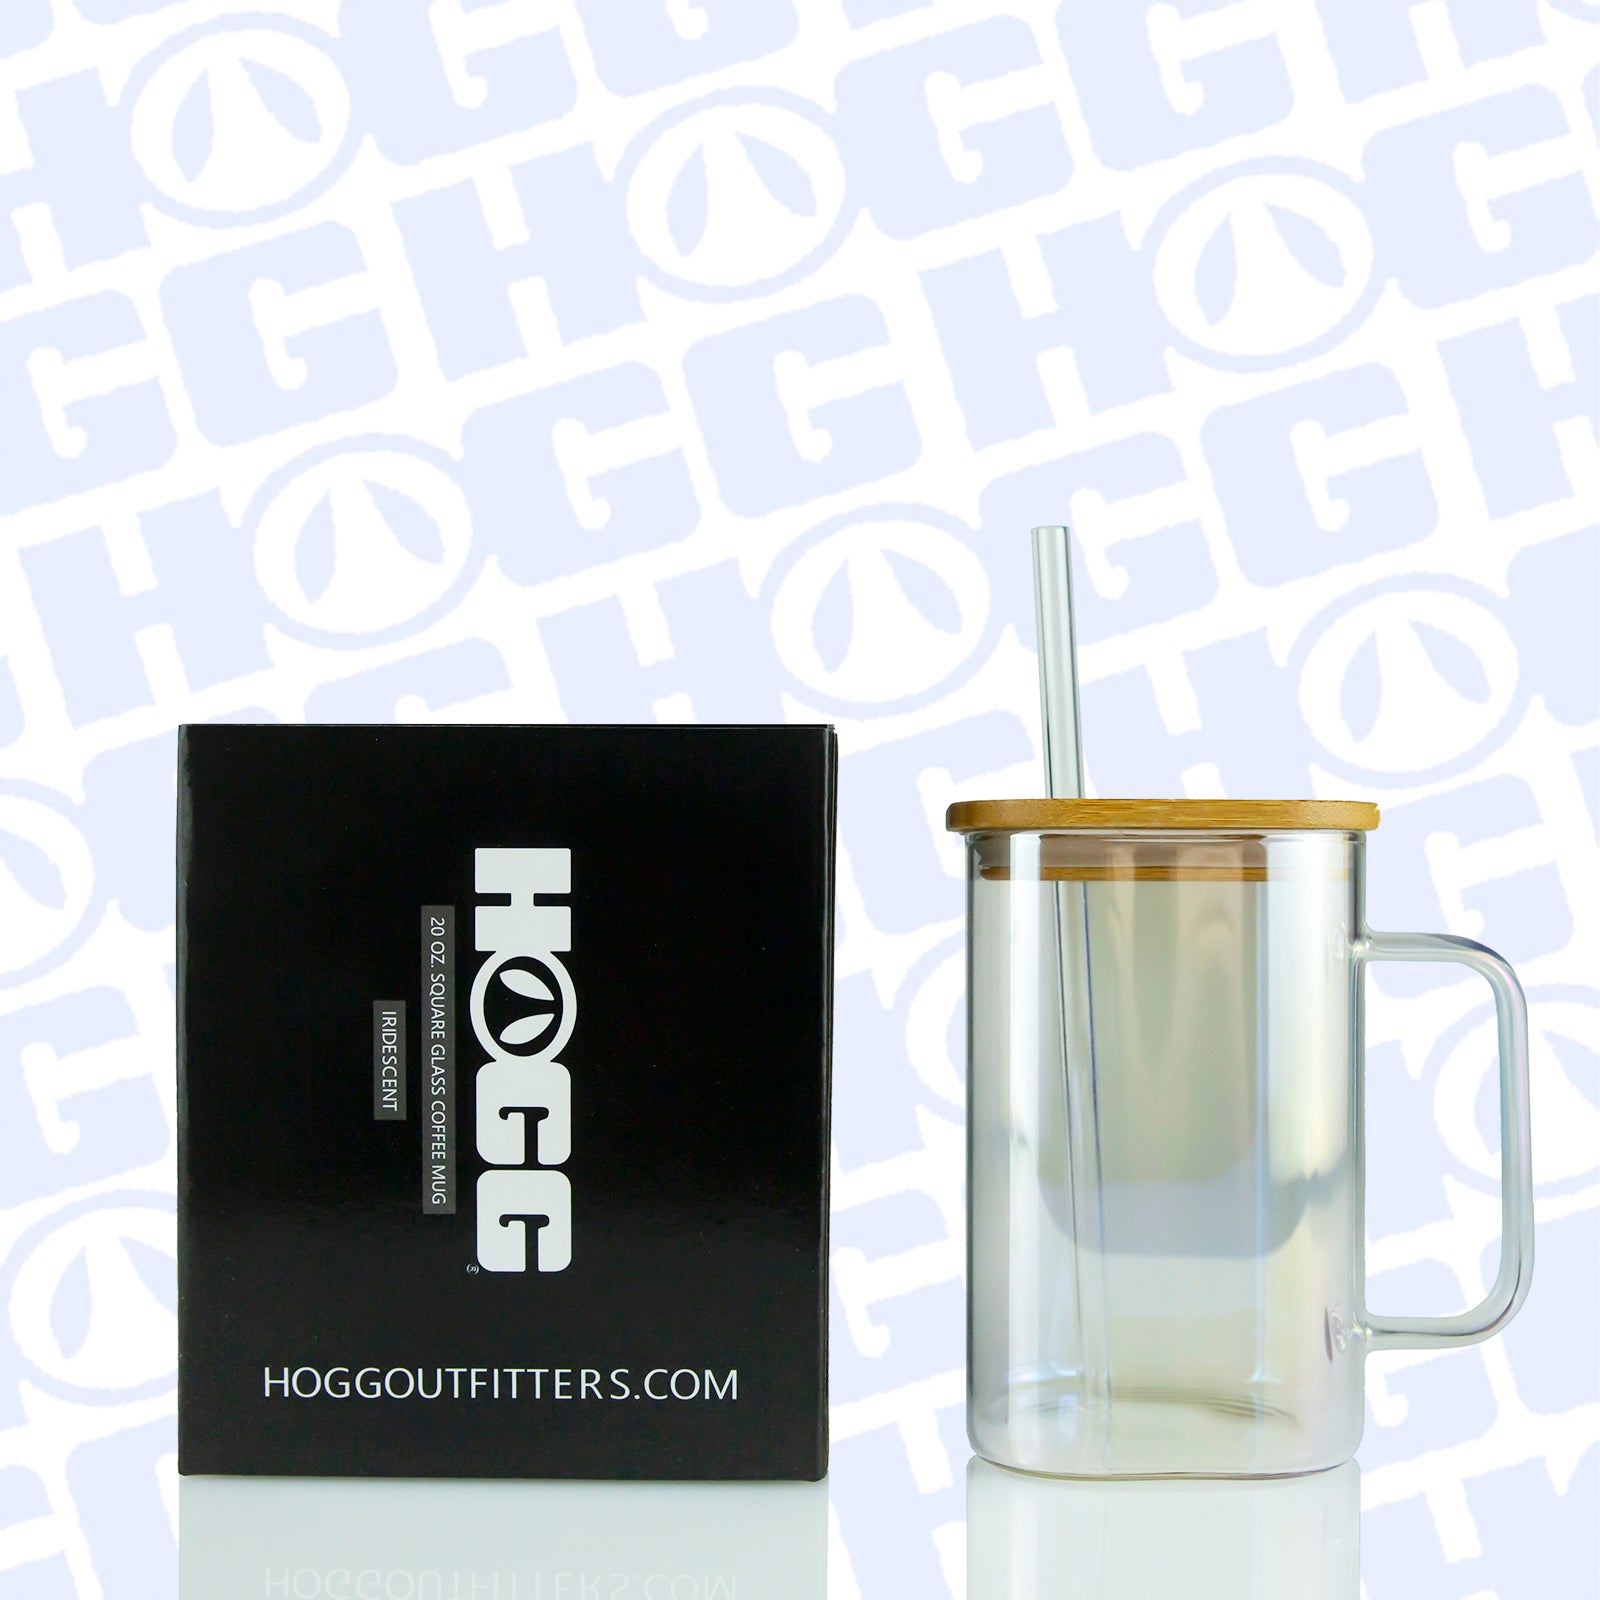 20oz Sublimatable Iridescent Glass Coffee Mug Case (25 Units)